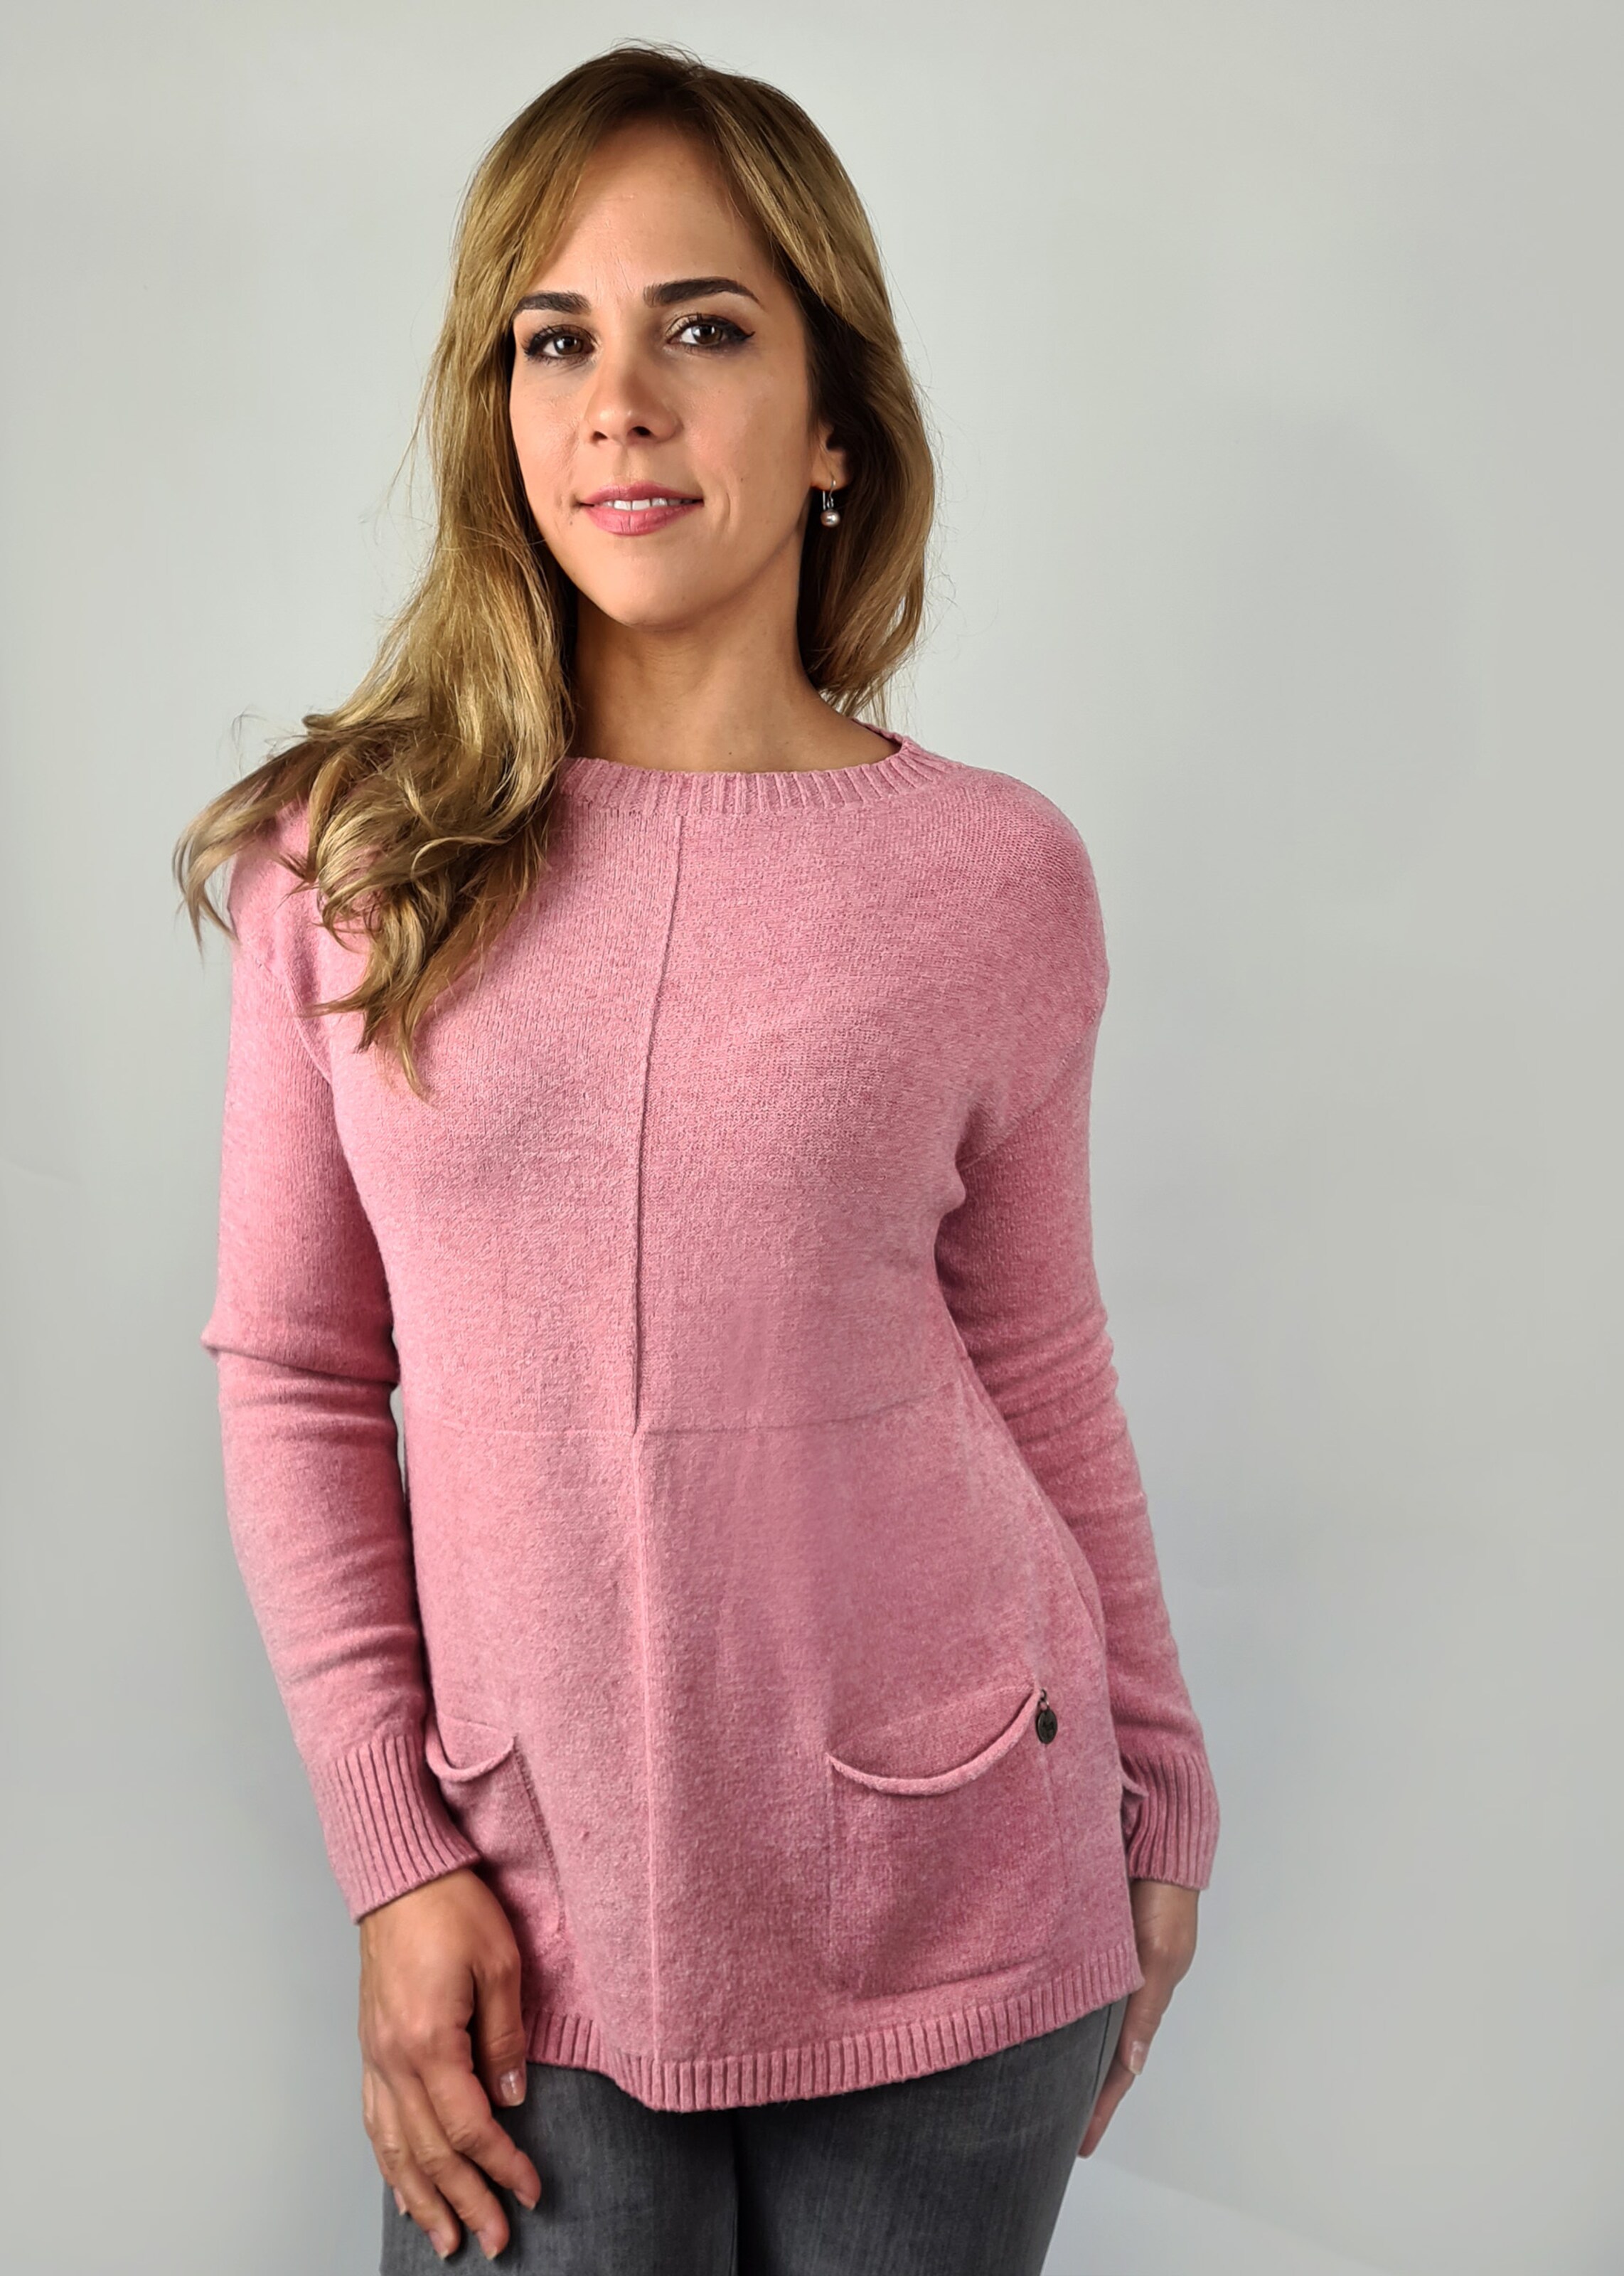 Frauen Pullover & Strick Heimatliebe Pullover in Pink, Rosa - WG31542